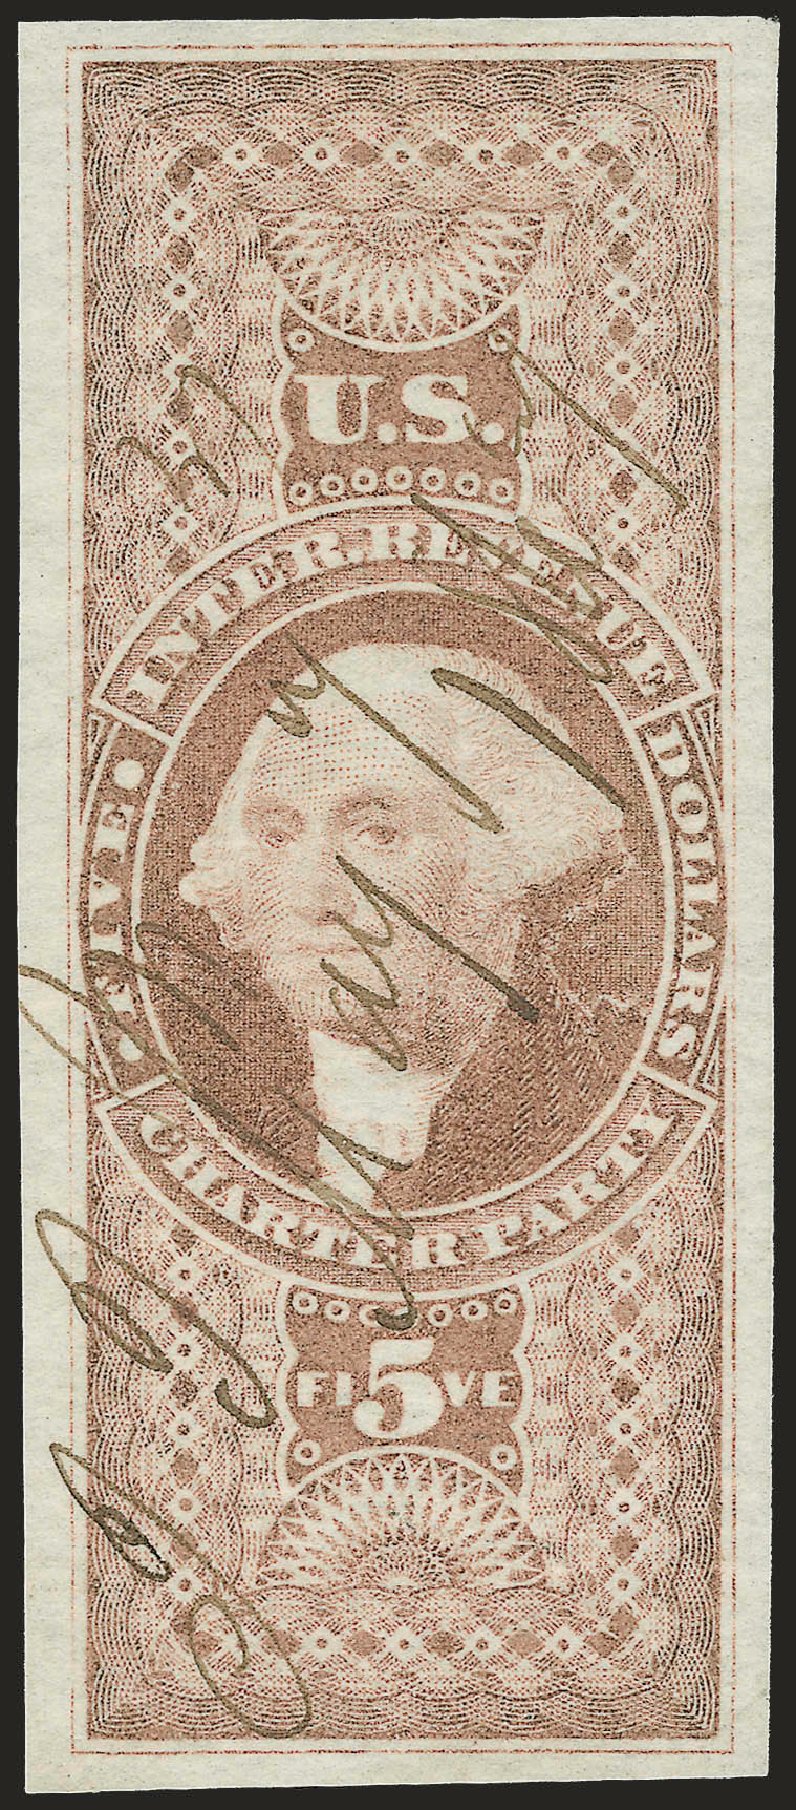 US Stamps Prices Scott Catalog #R88: 1862 US$5.00 Revenue Charter Party. Robert Siegel Auction Galleries, Sep 2009, Sale 976, Lot 2365